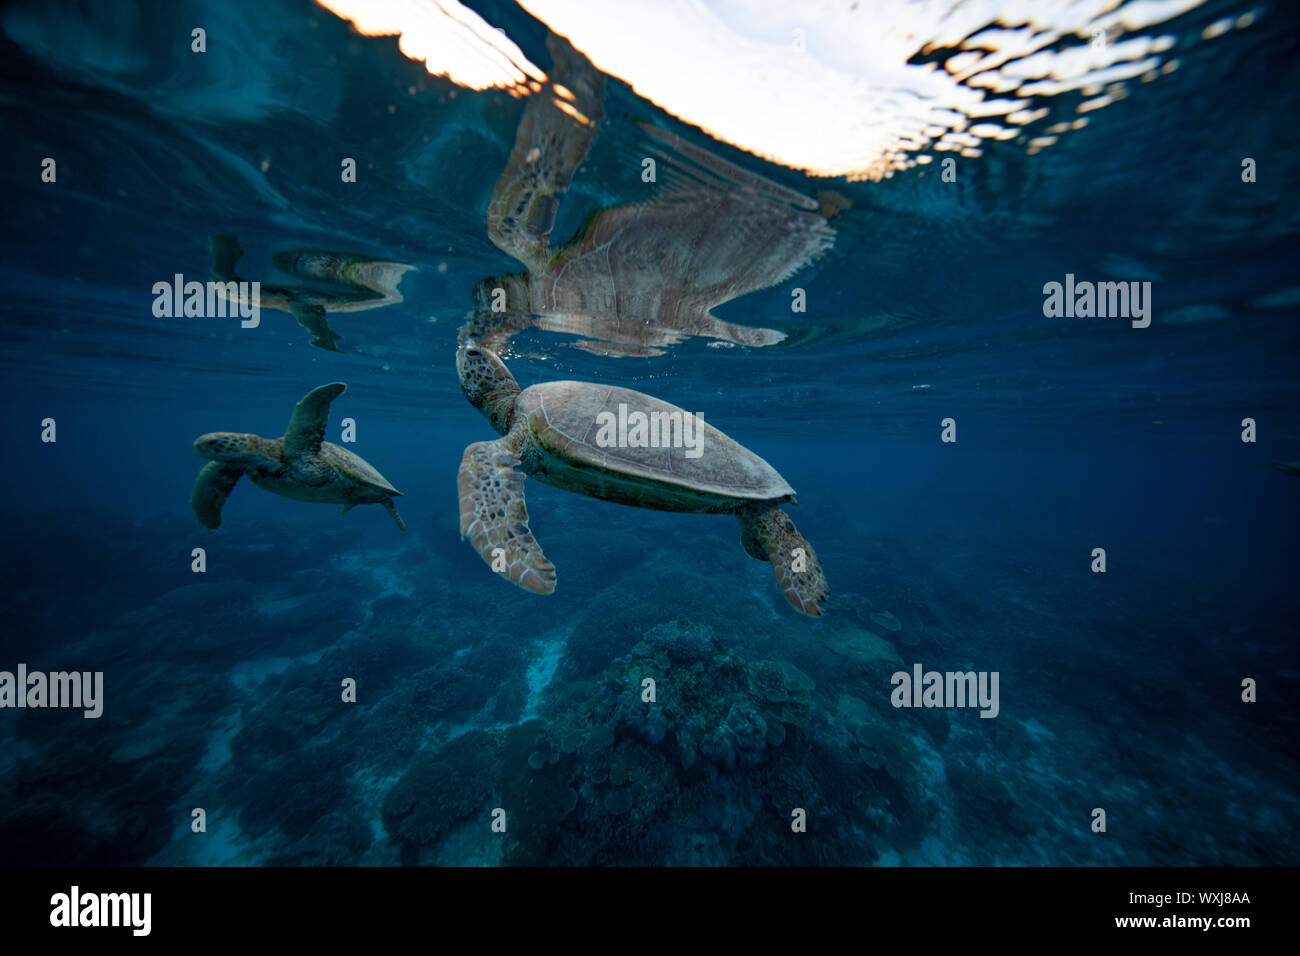 Two sea turtles swimming in ocean, Lady Elliot Island, Great Barrier Reef, Queensland, Australia Stock Photo